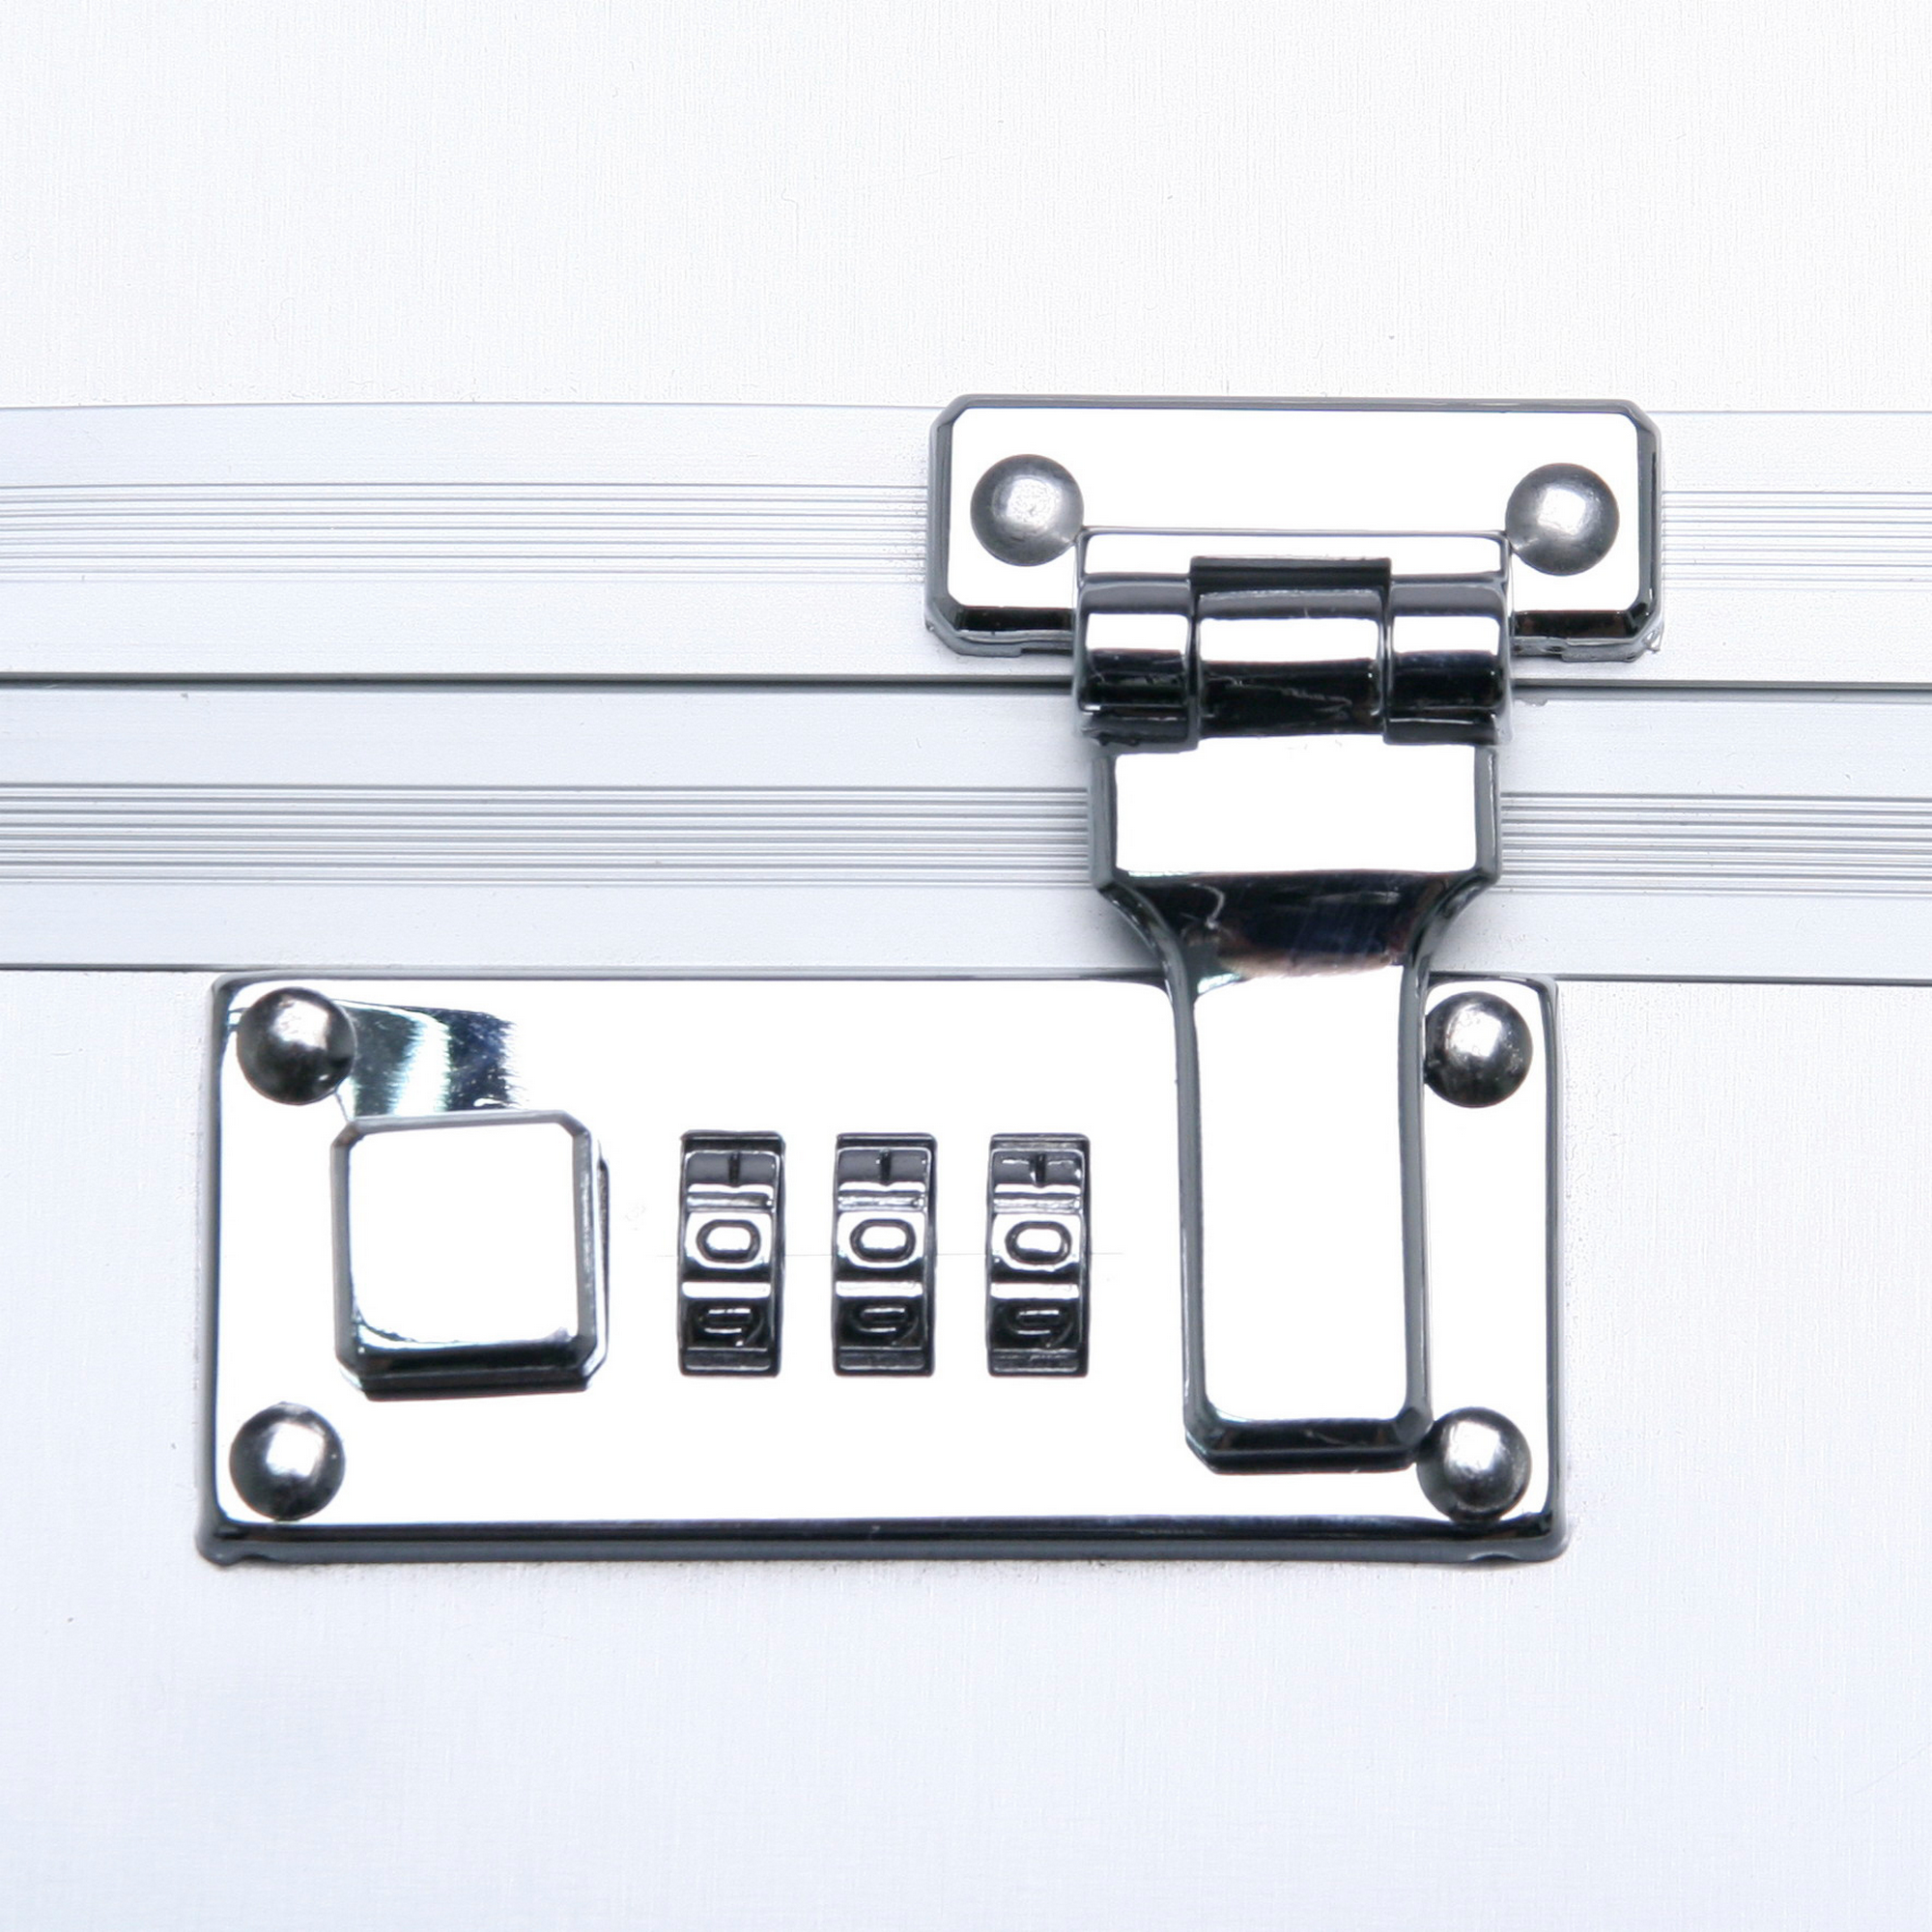 AluPlus Pilotenkoffer 'Travel 22' mit Zahlenschloss silber 55,5 x 21 x 40,5 cm + product picture